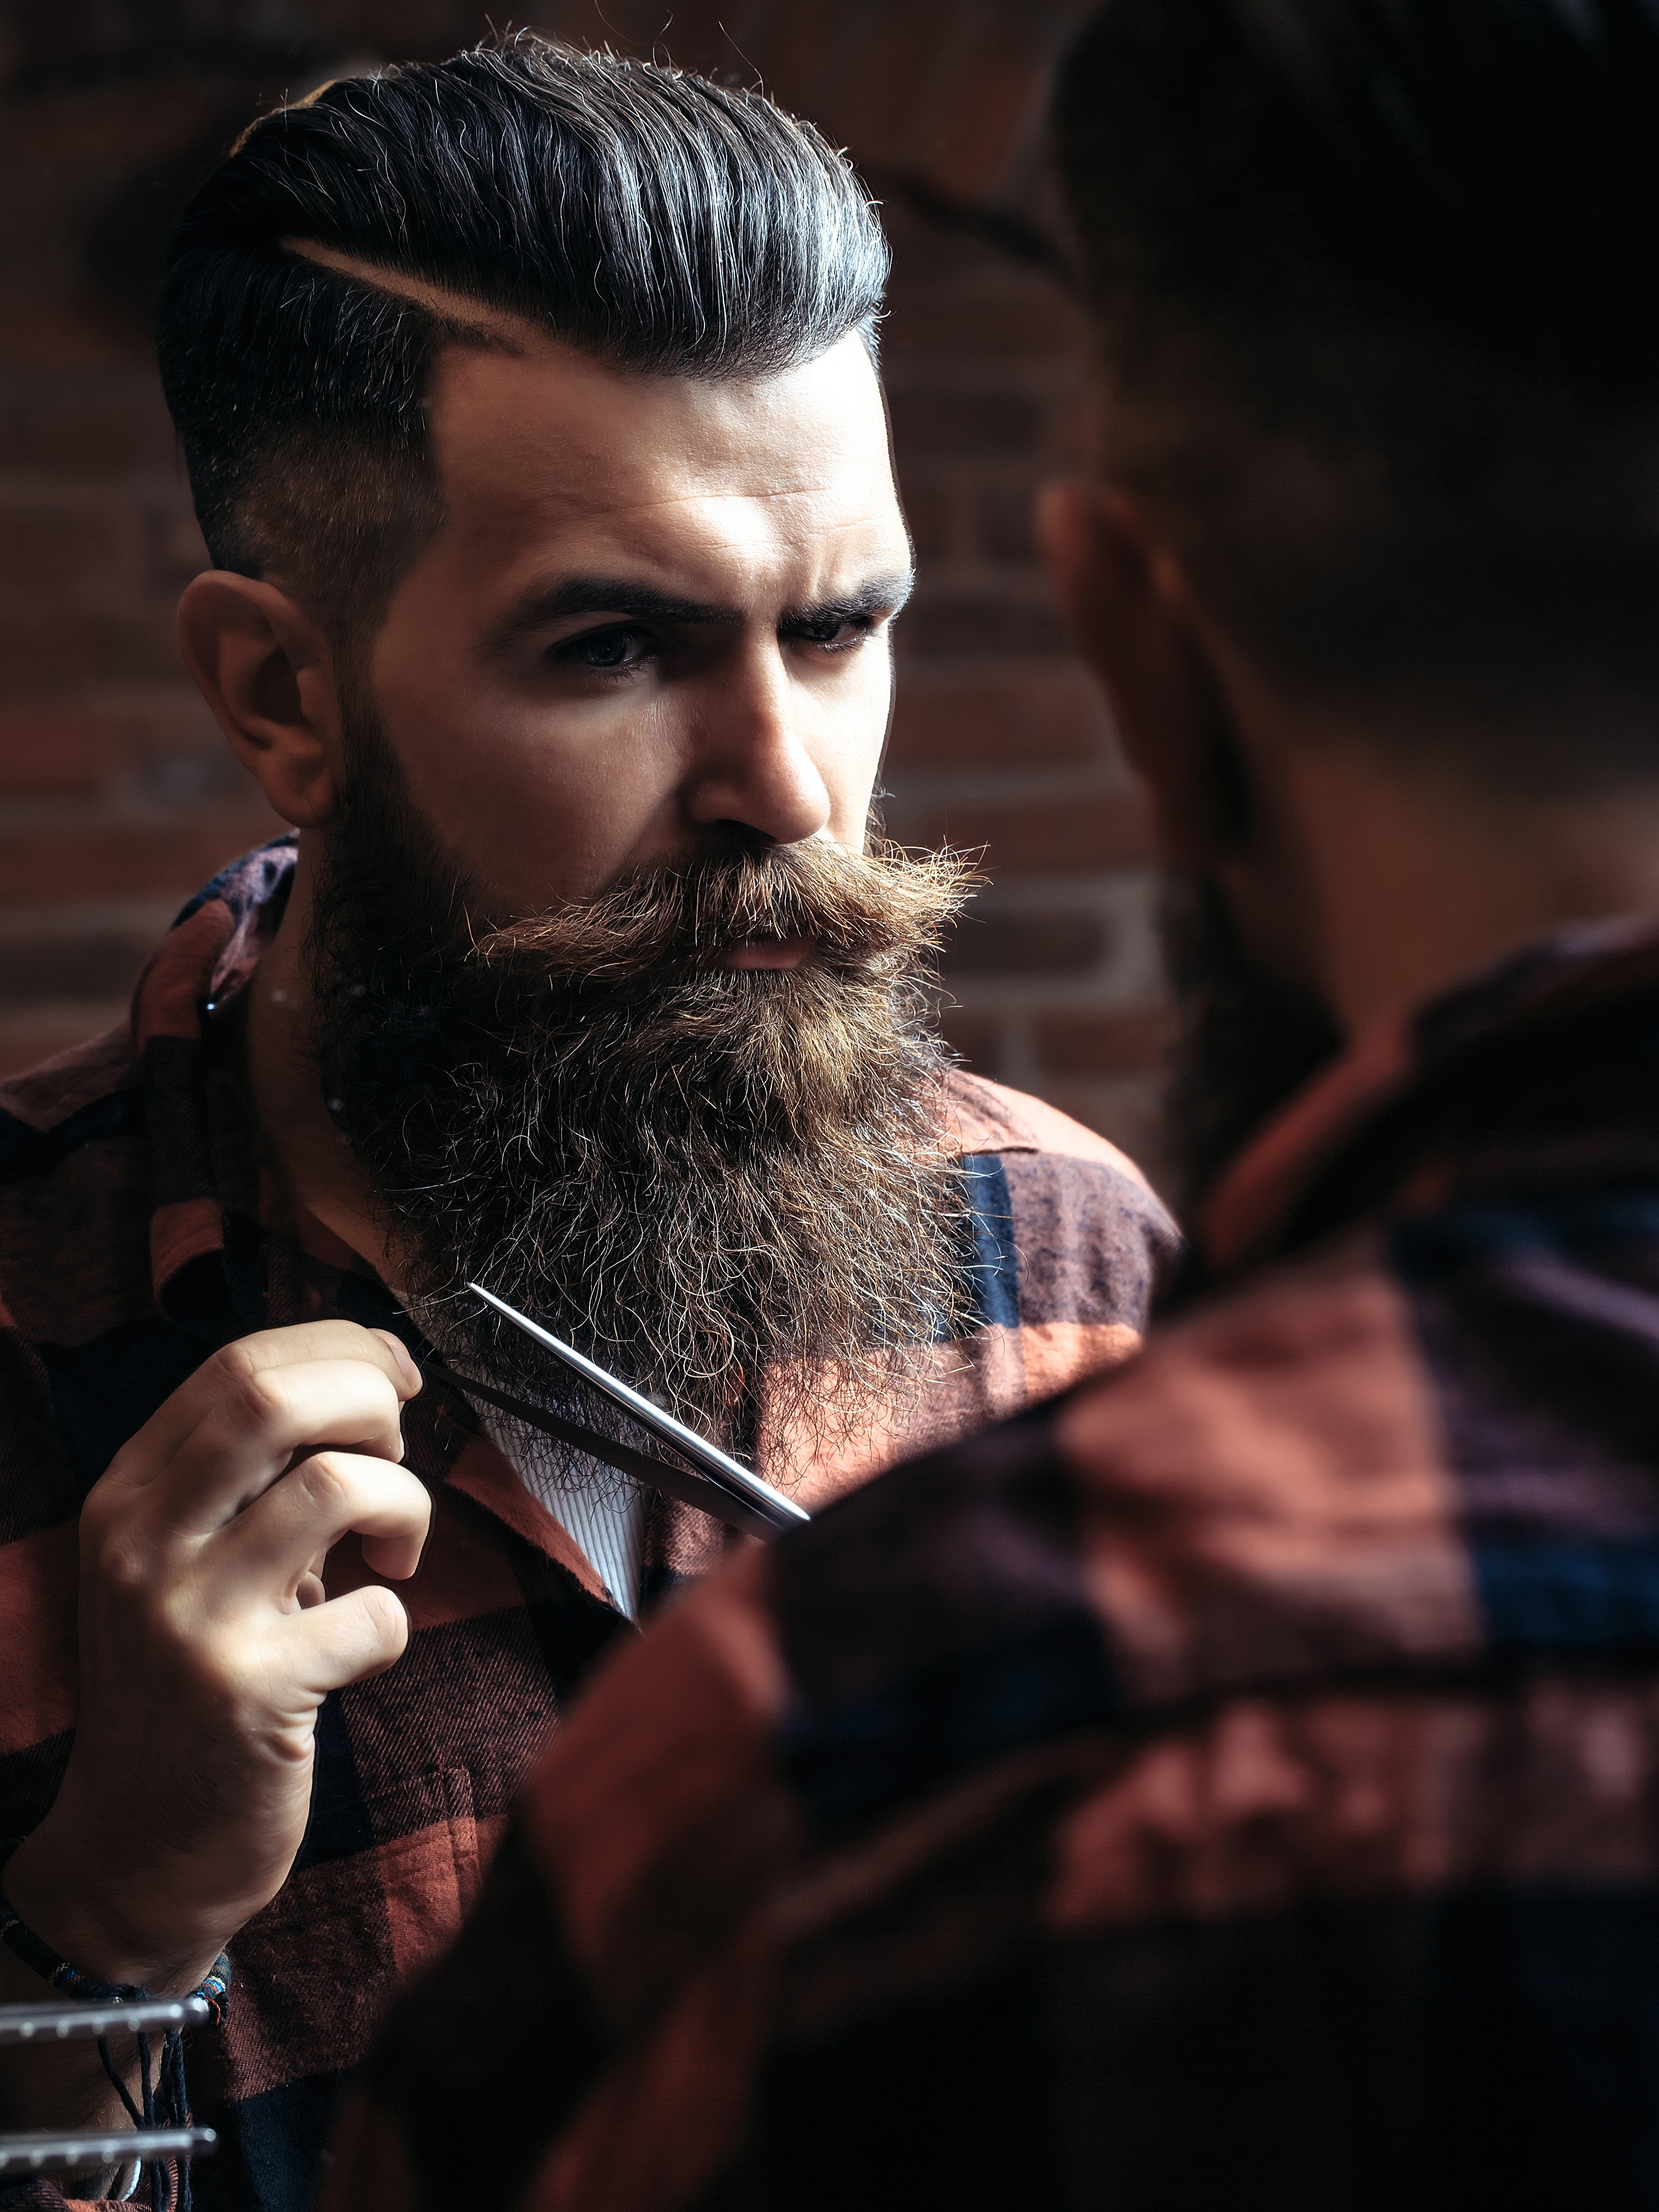 Beard styles and mustache preparation